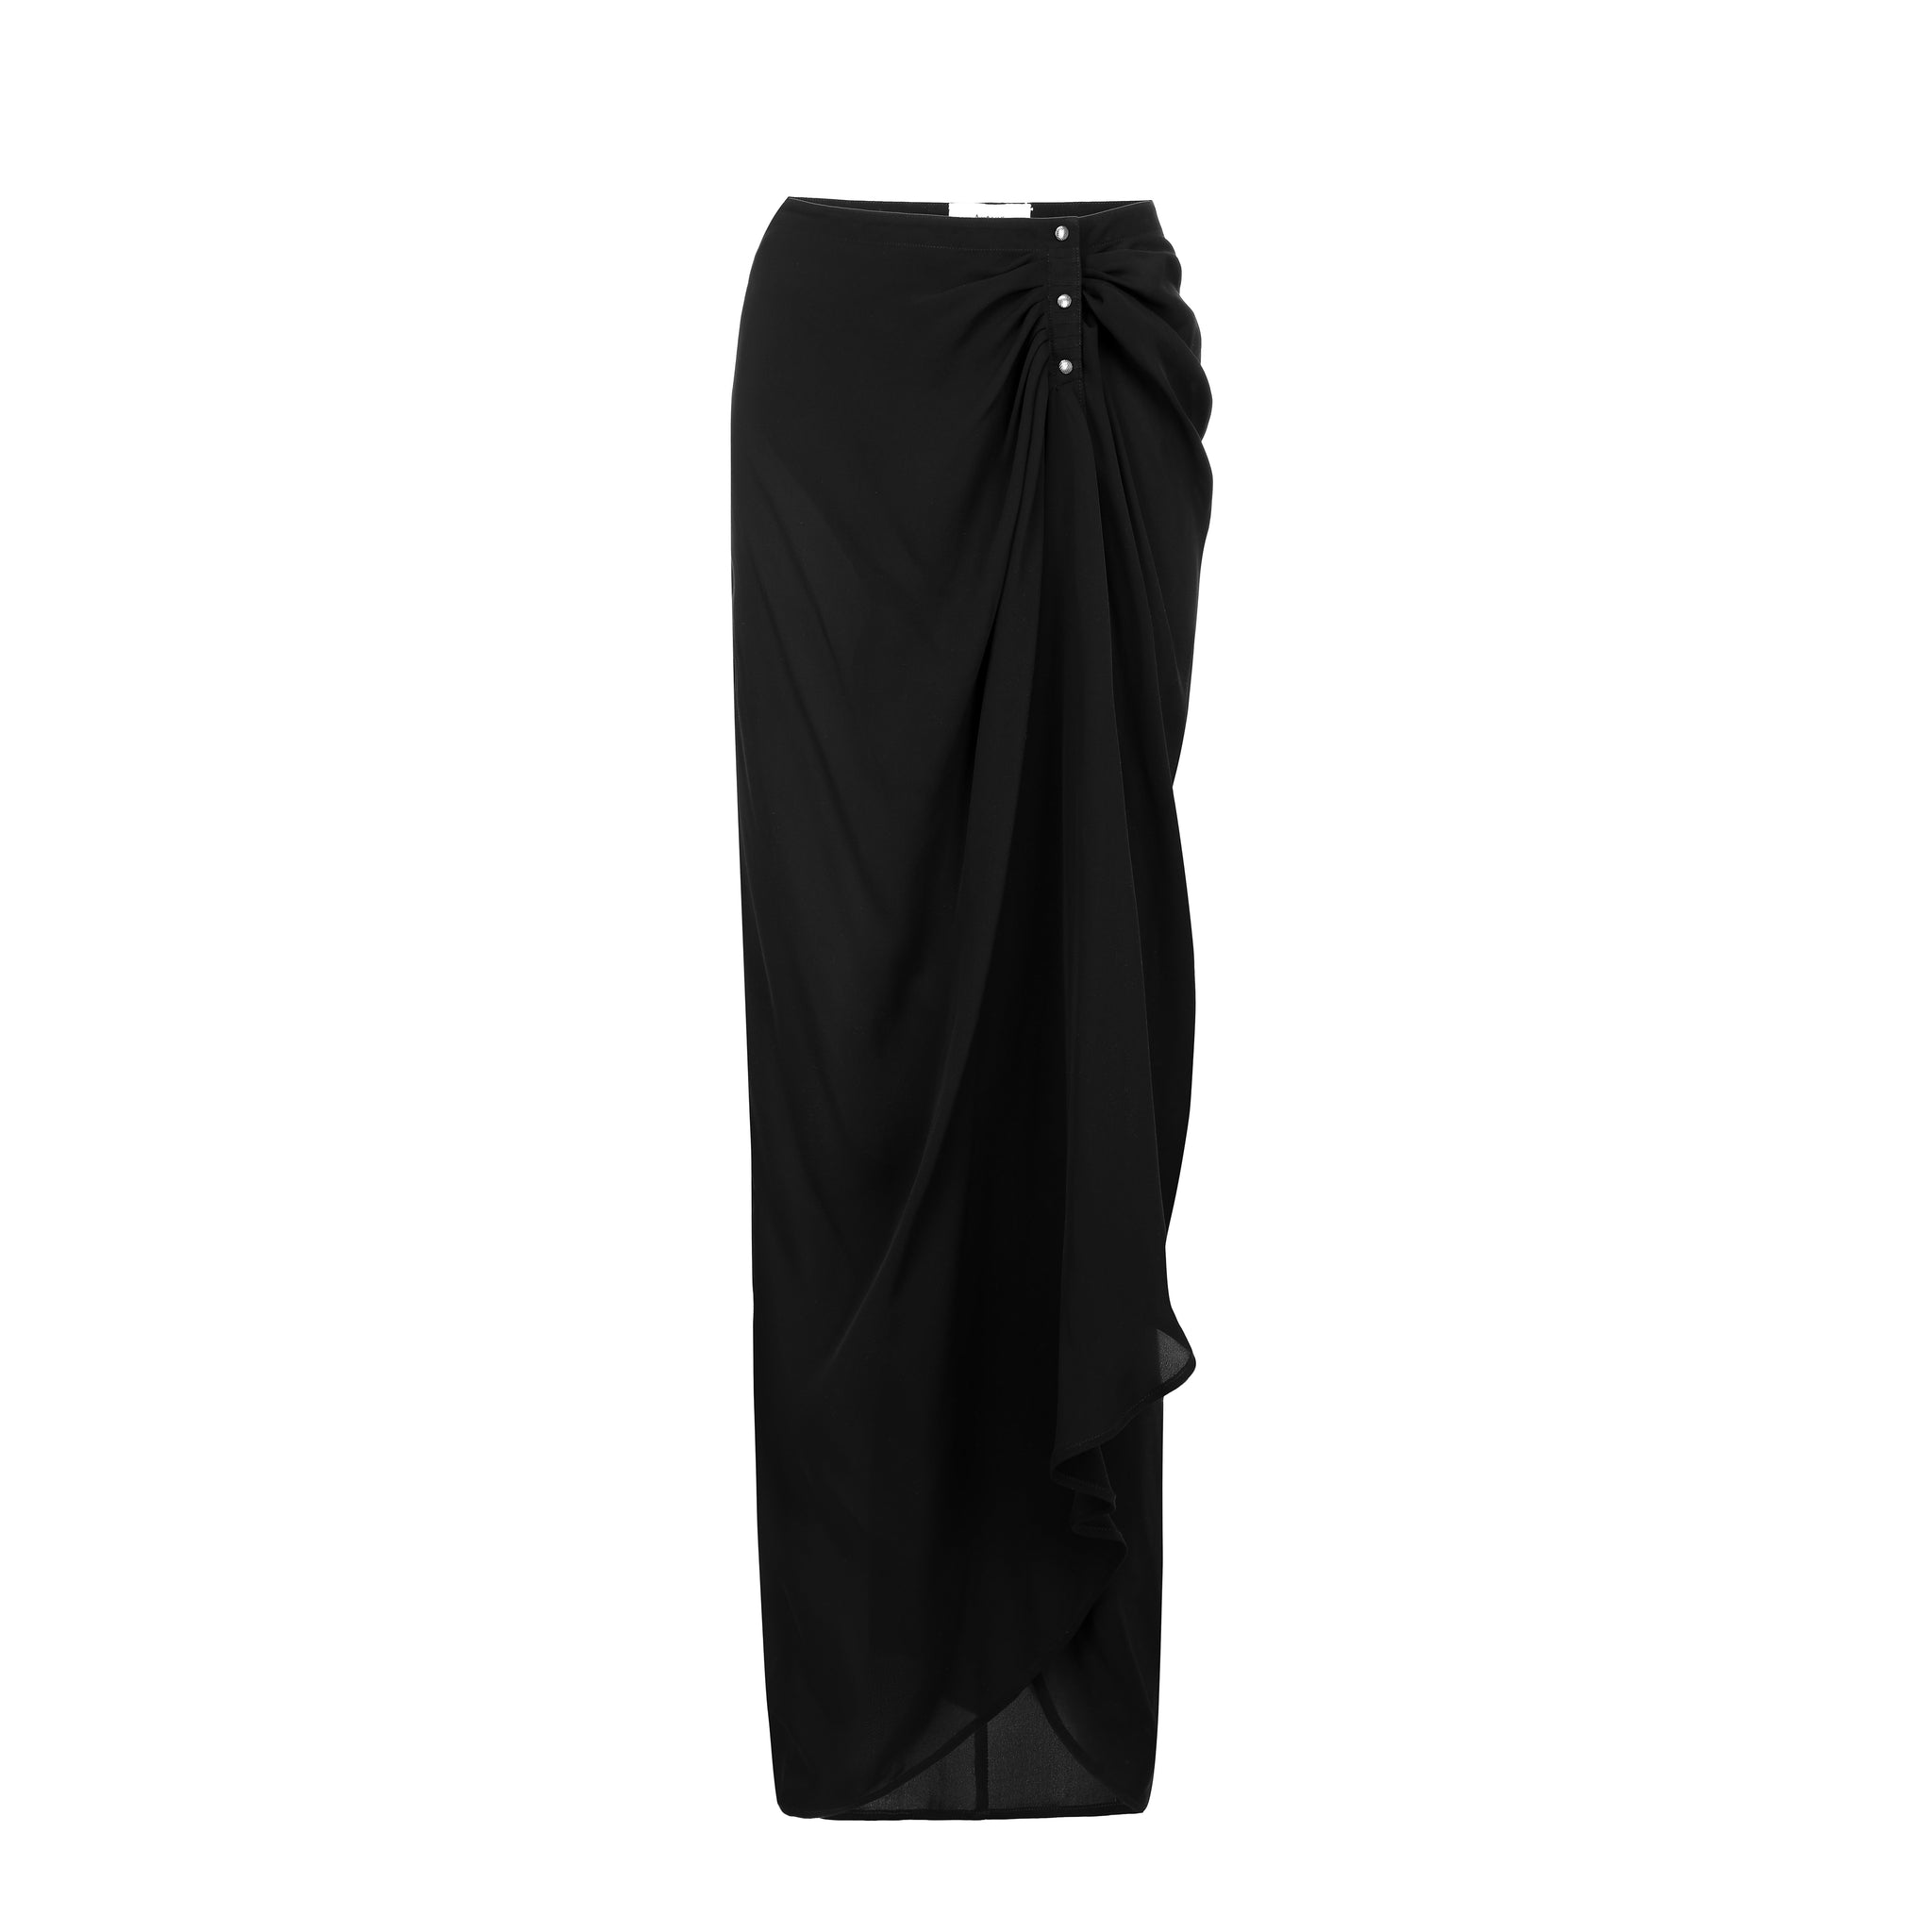 New Twisted Skirt - Black